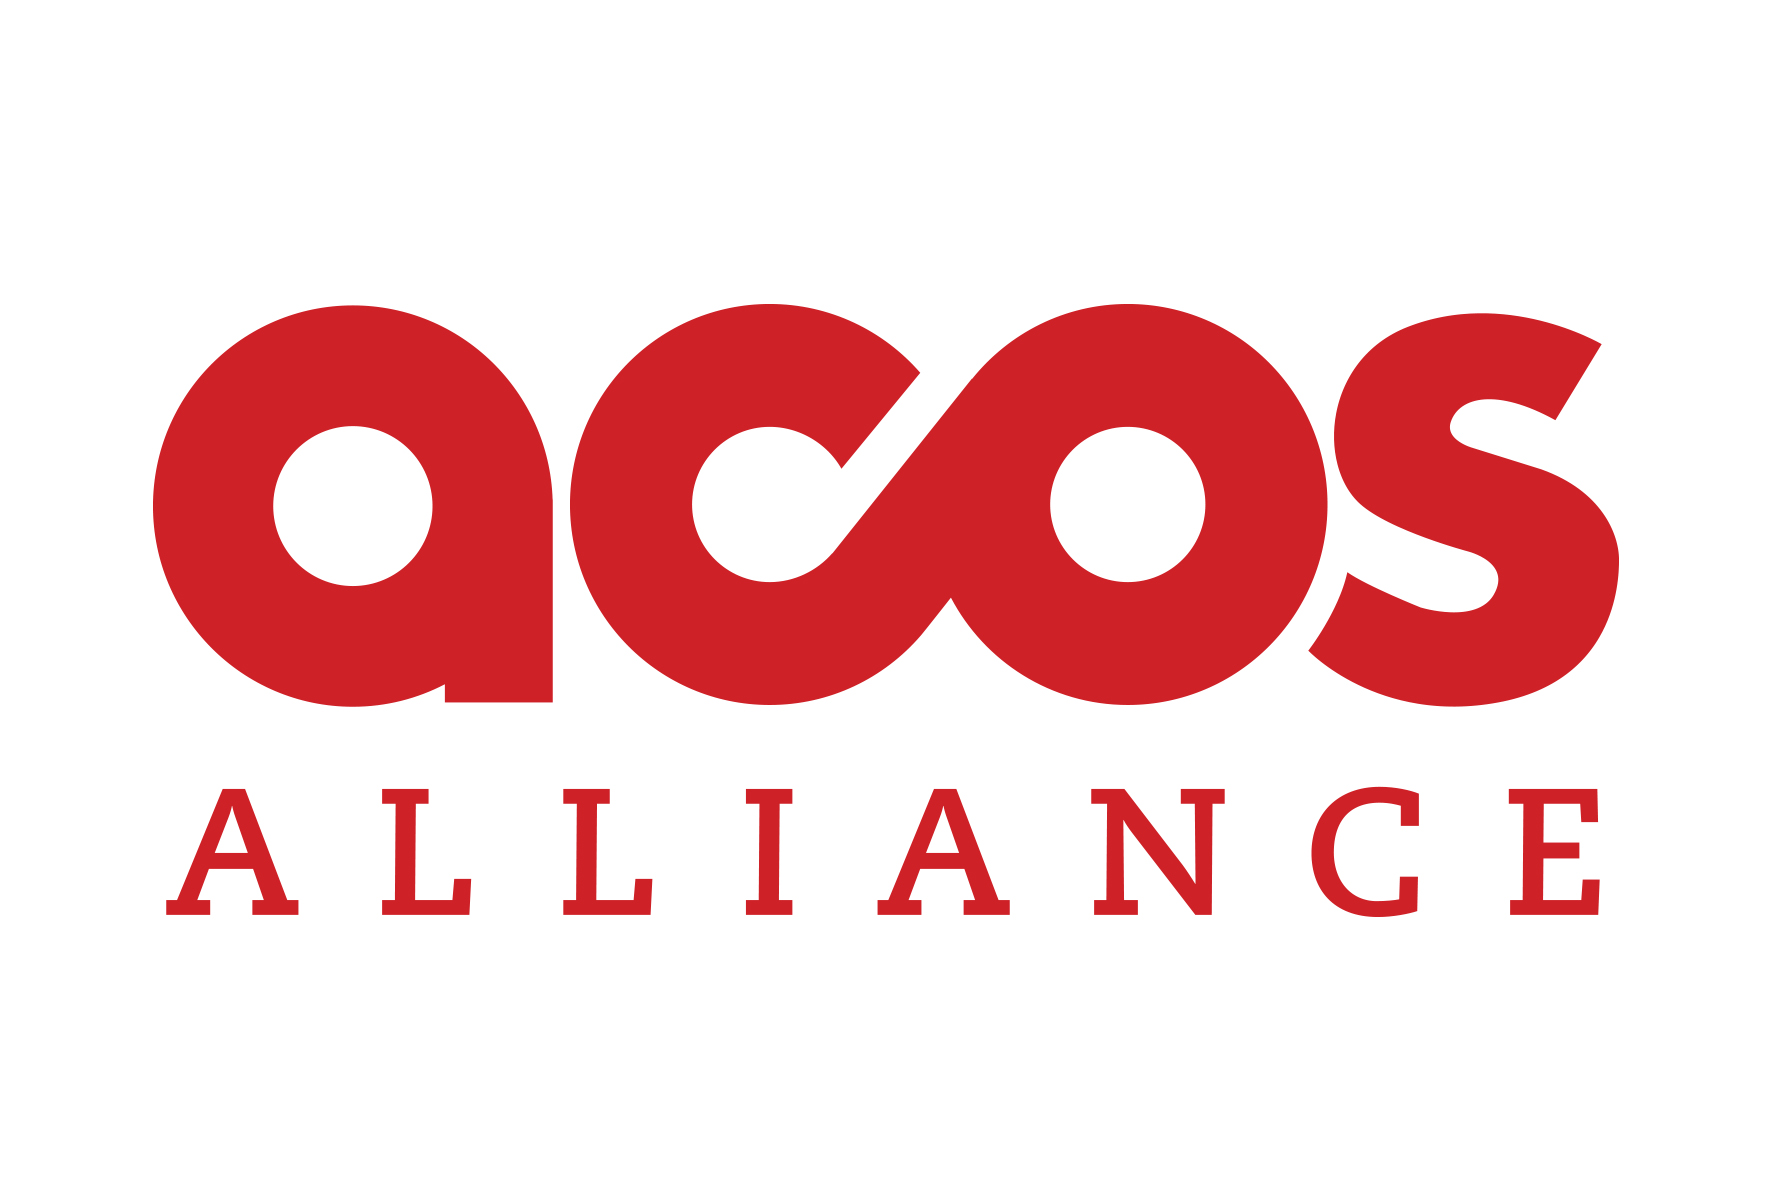 The ACOS Alliance